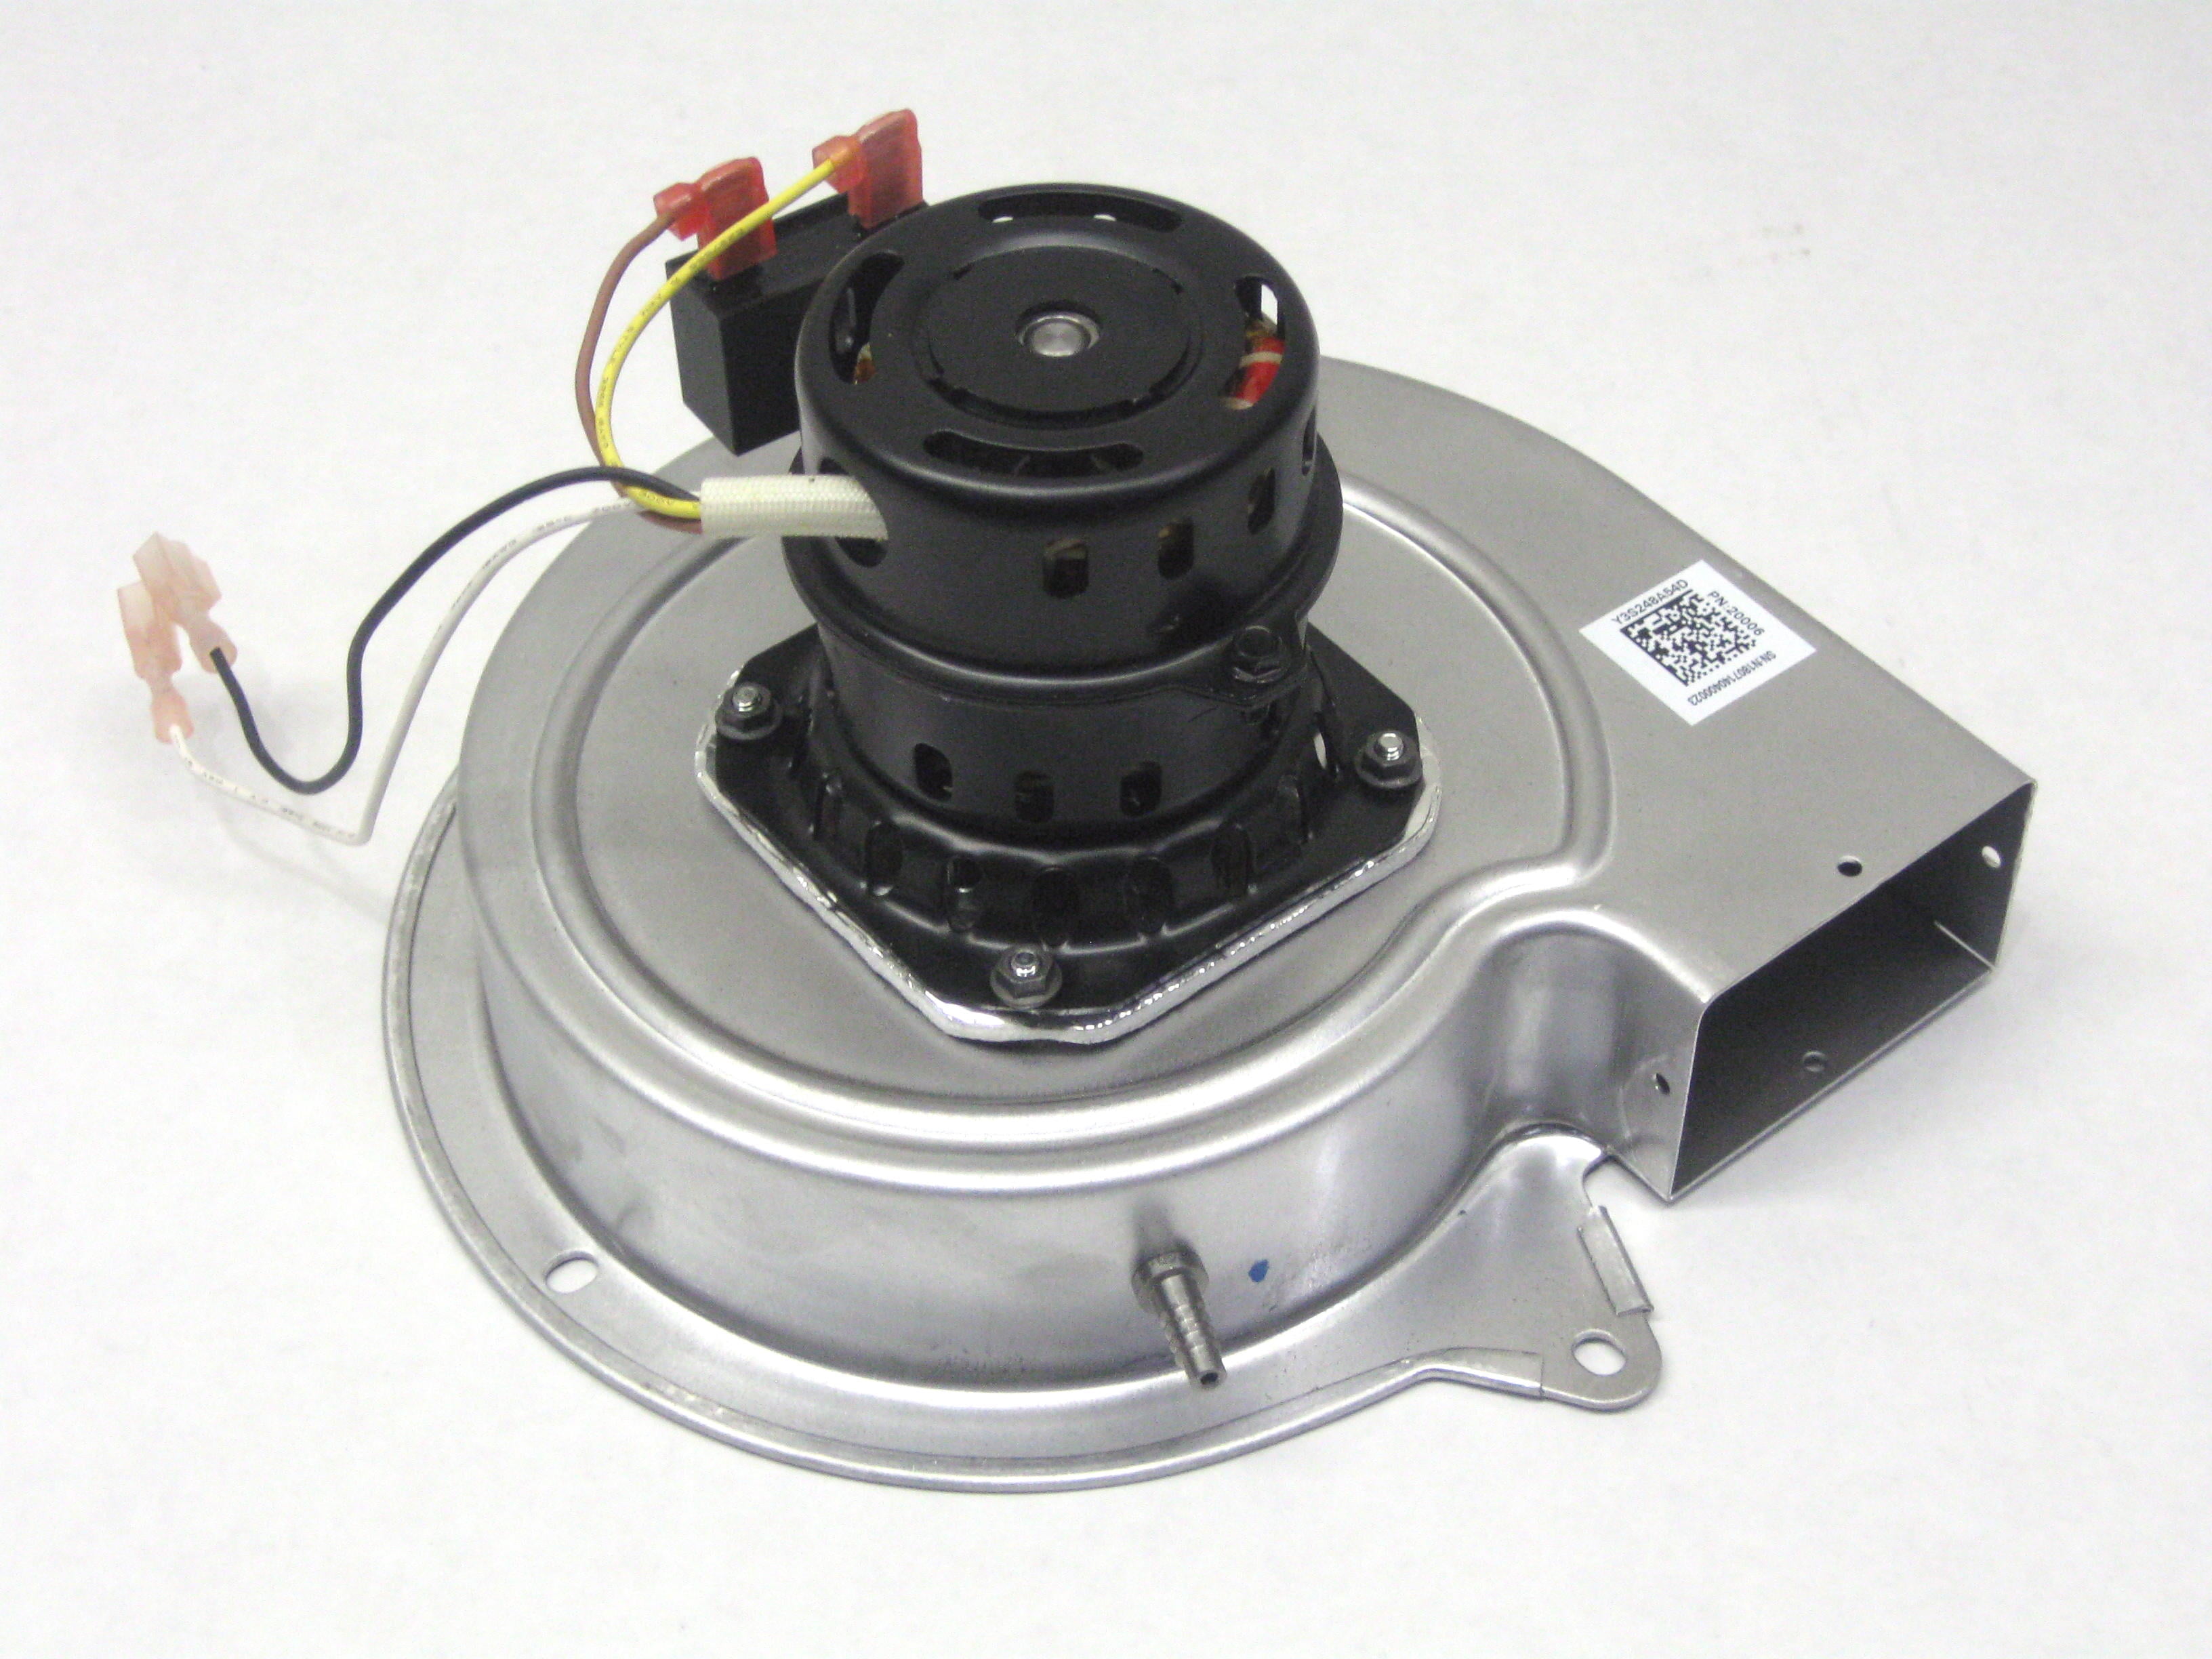 Furnace Draft Inducer Blower Motor for Goodman 0131M00121